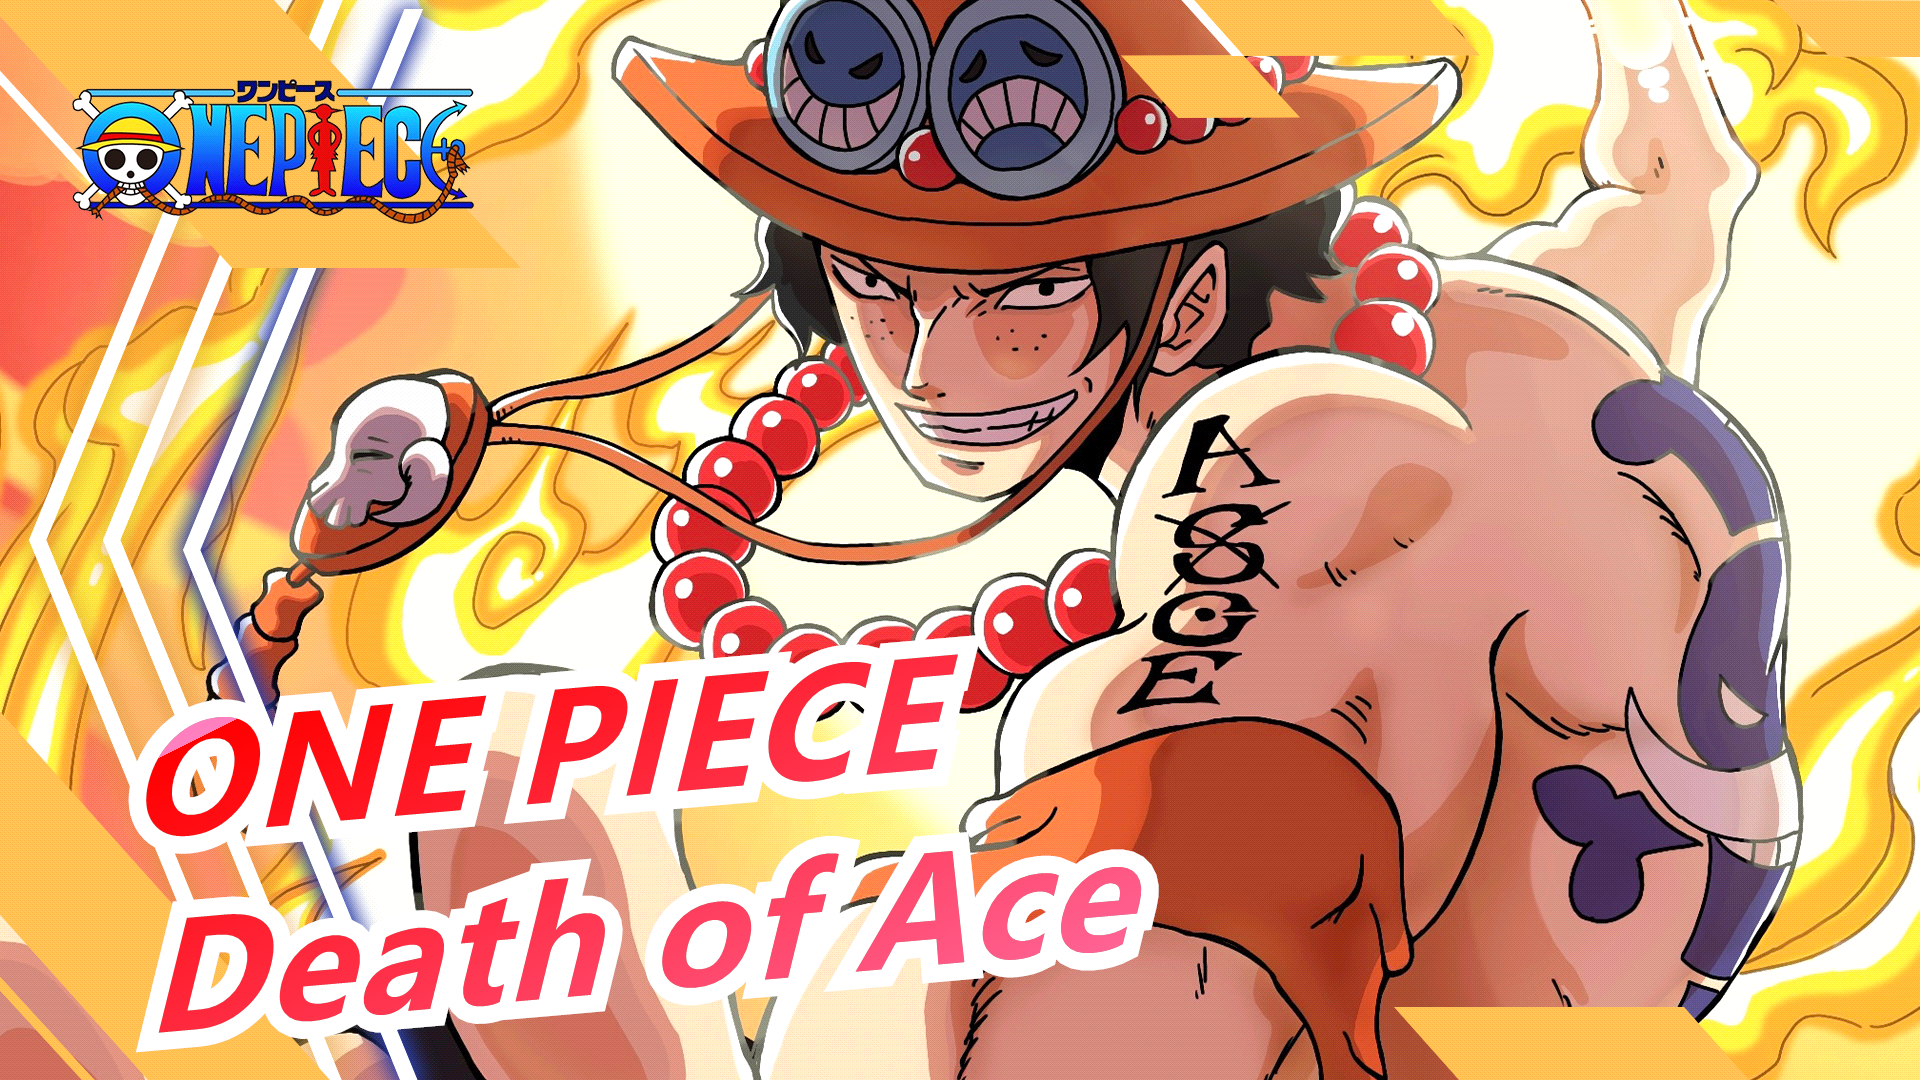 Portgas D. Ace/History | One Piece Wiki | Fandom